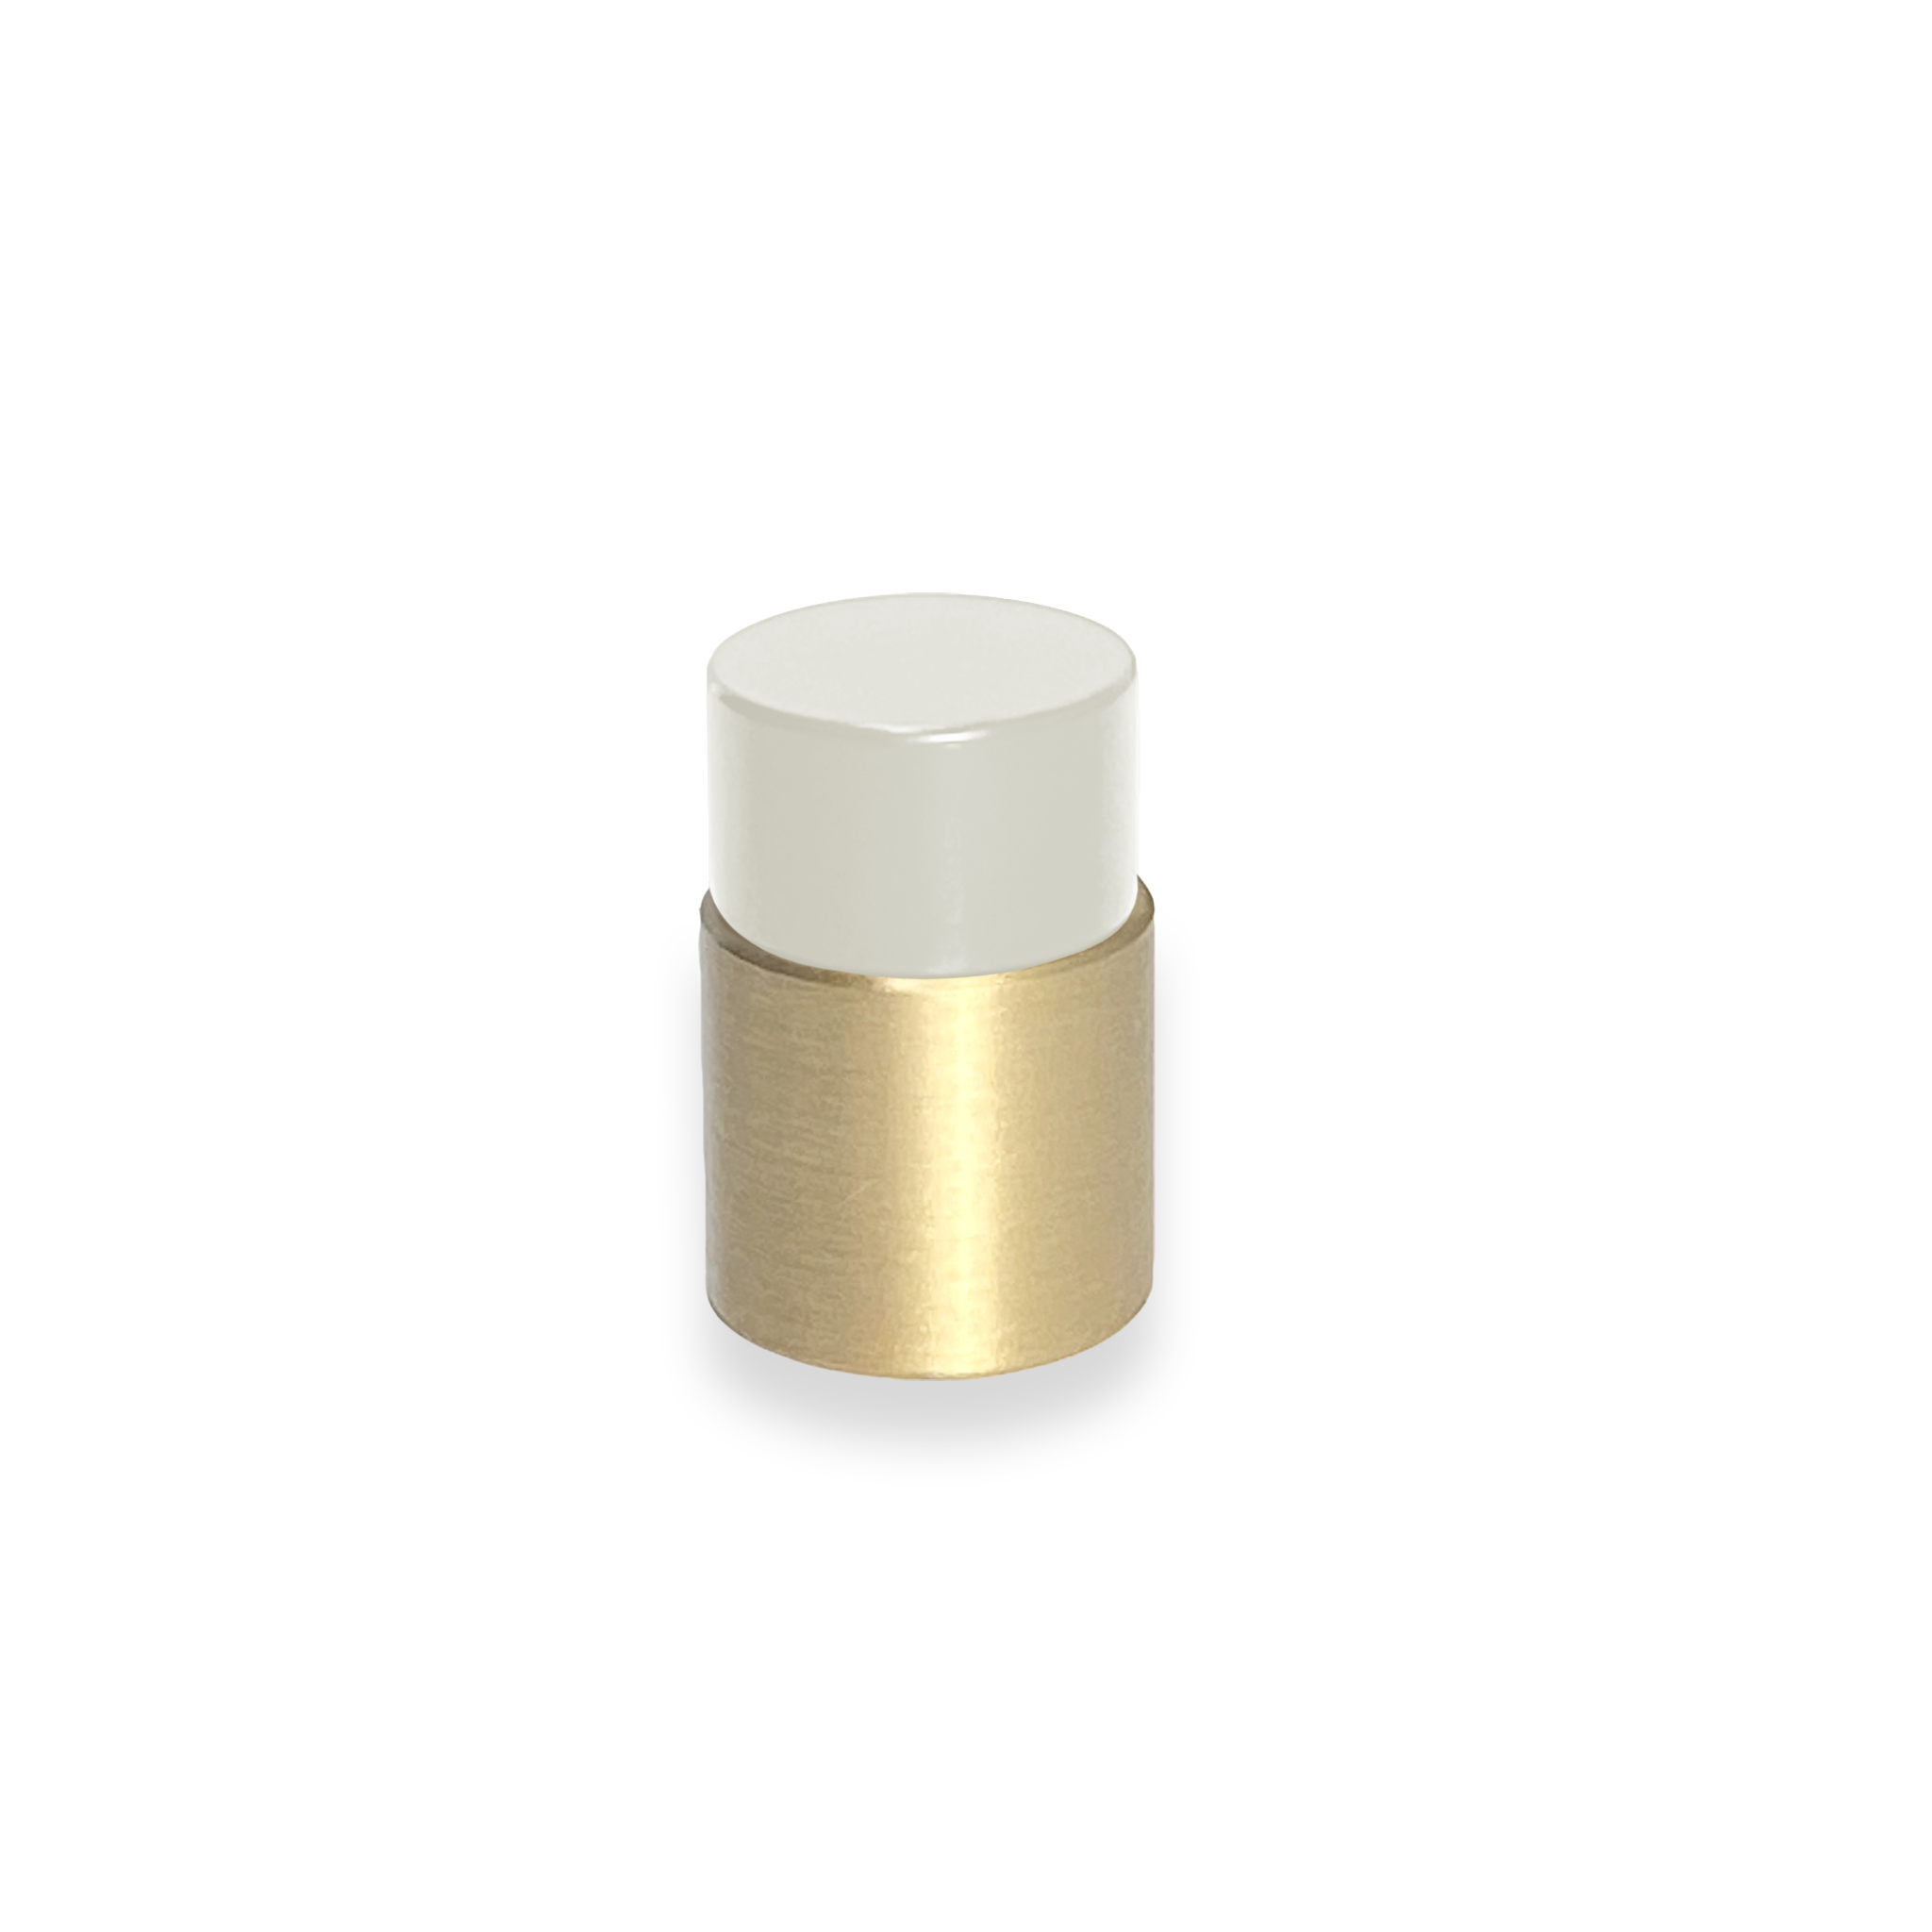 Brass and bone color Nip knob Dutton Brown hardware